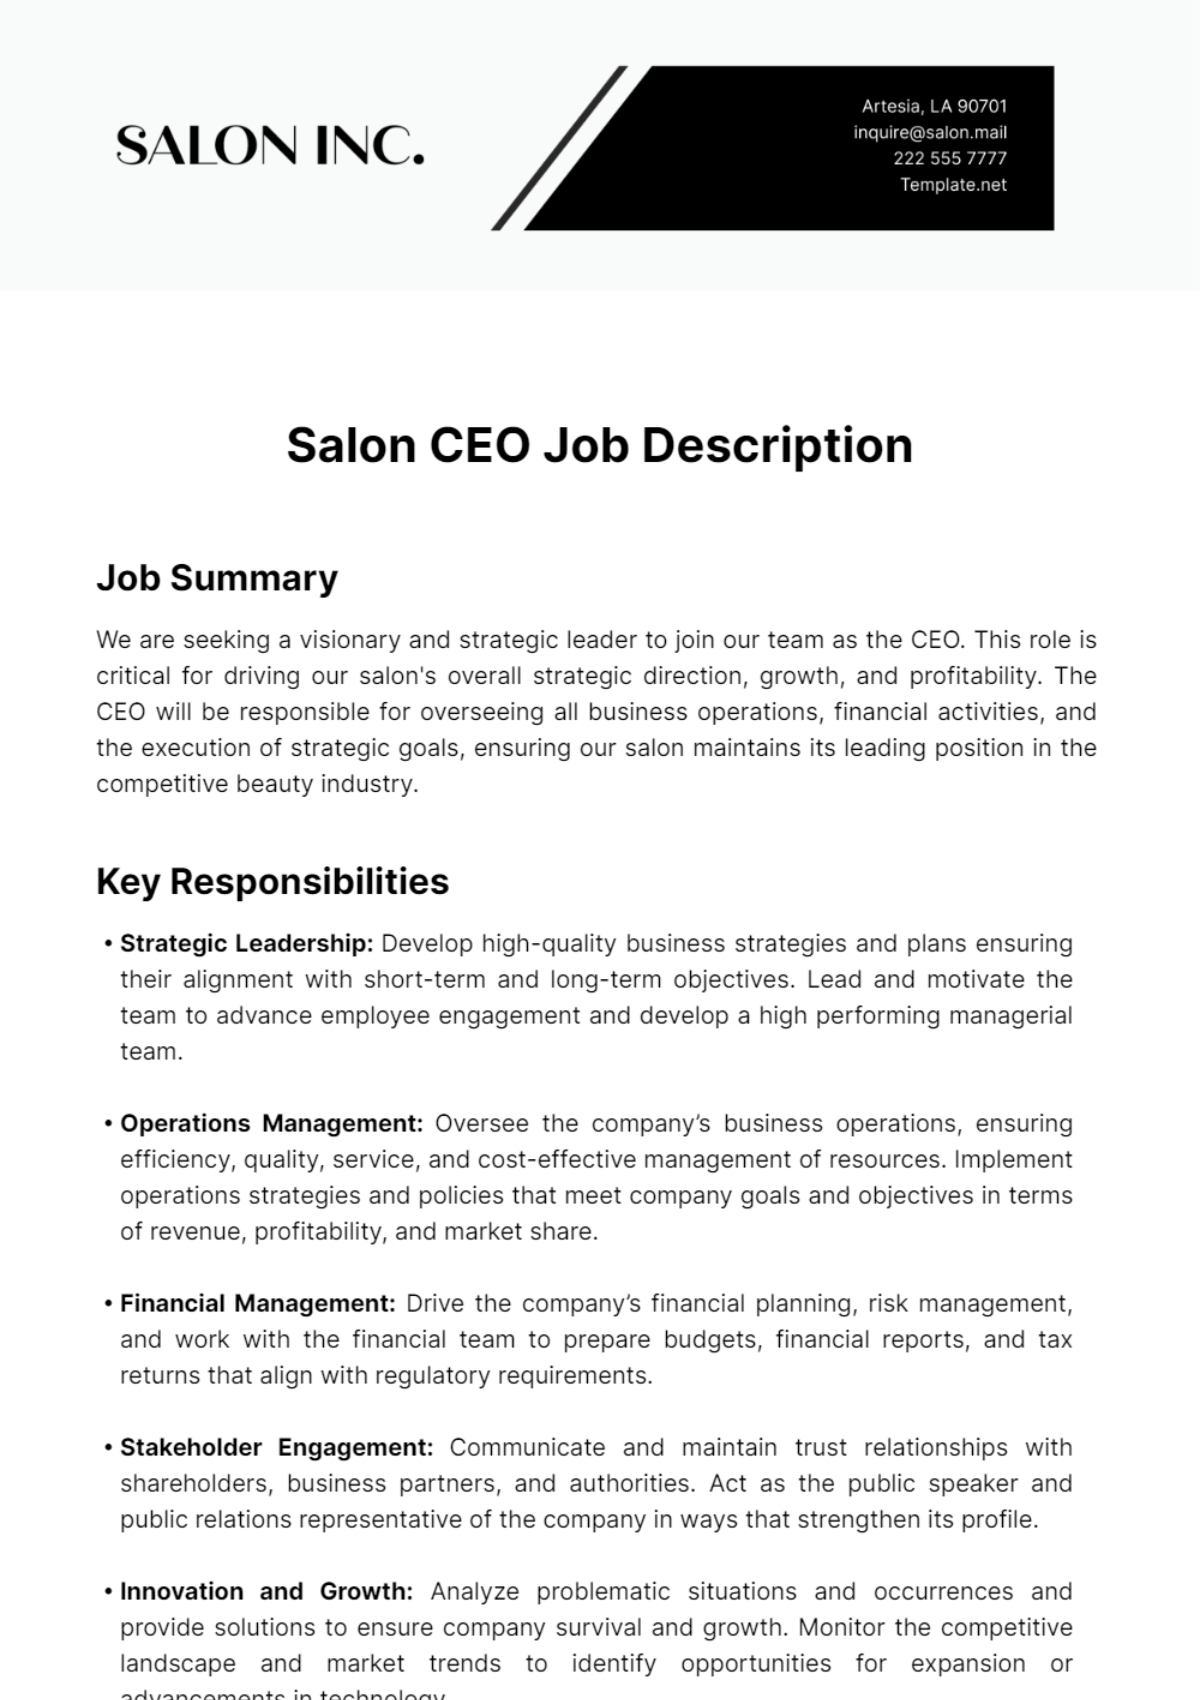 Free Salon CEO Job Description Template